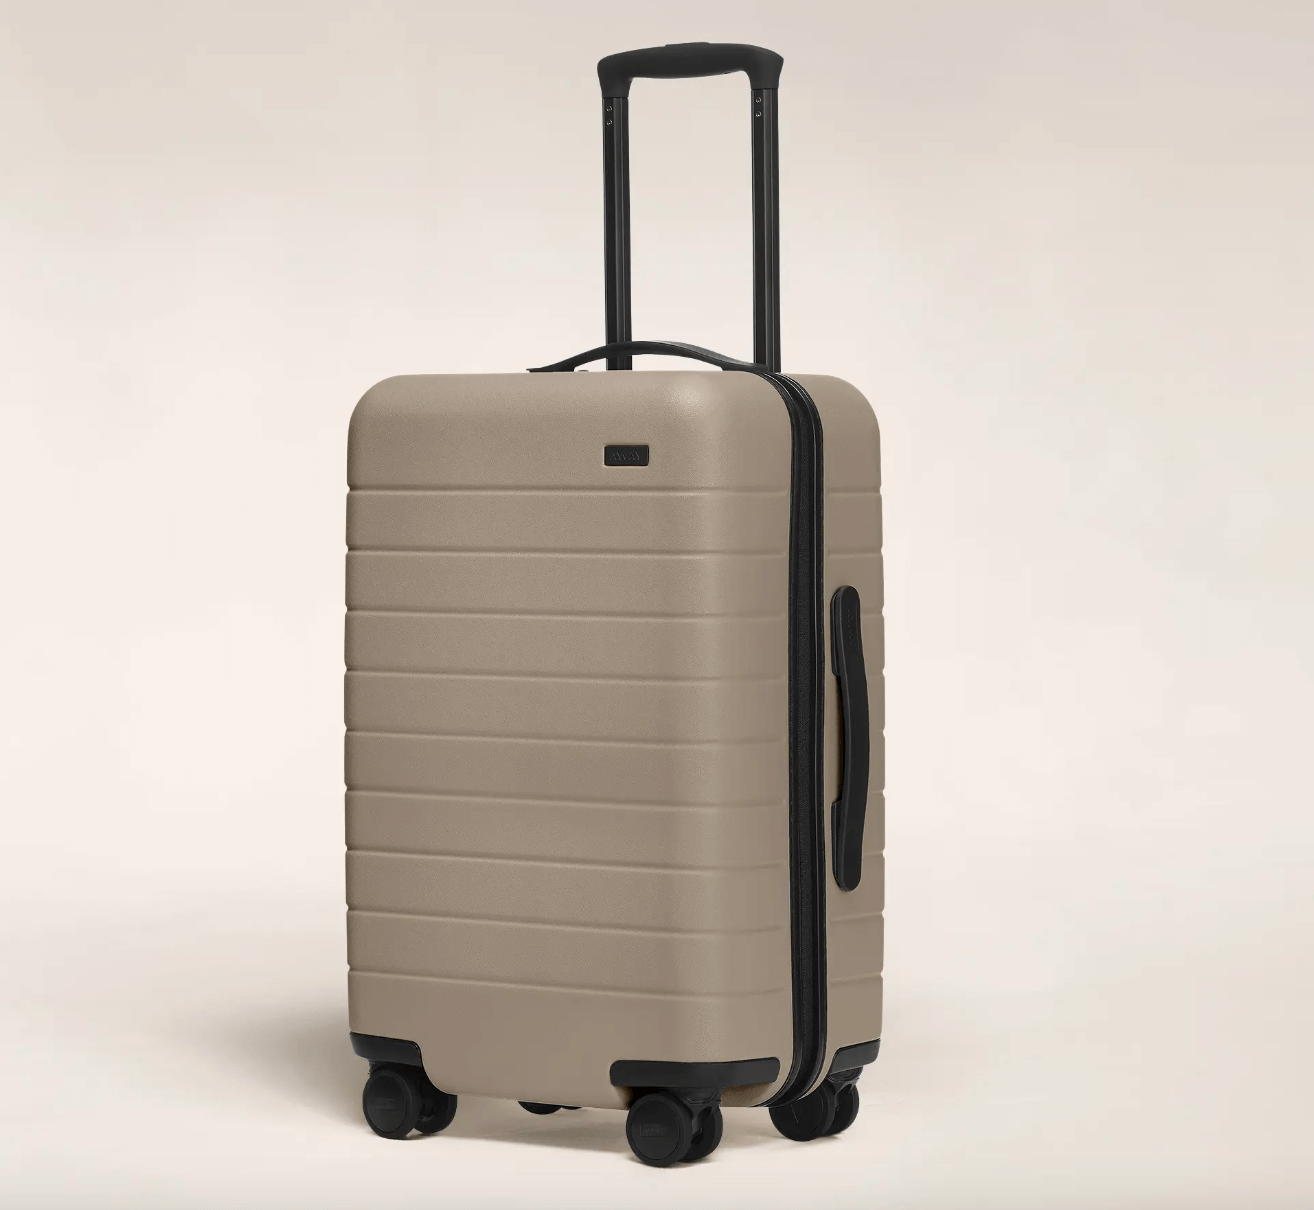 away carry on luggage sand color black zipper black handle black wheels hardside suitcase